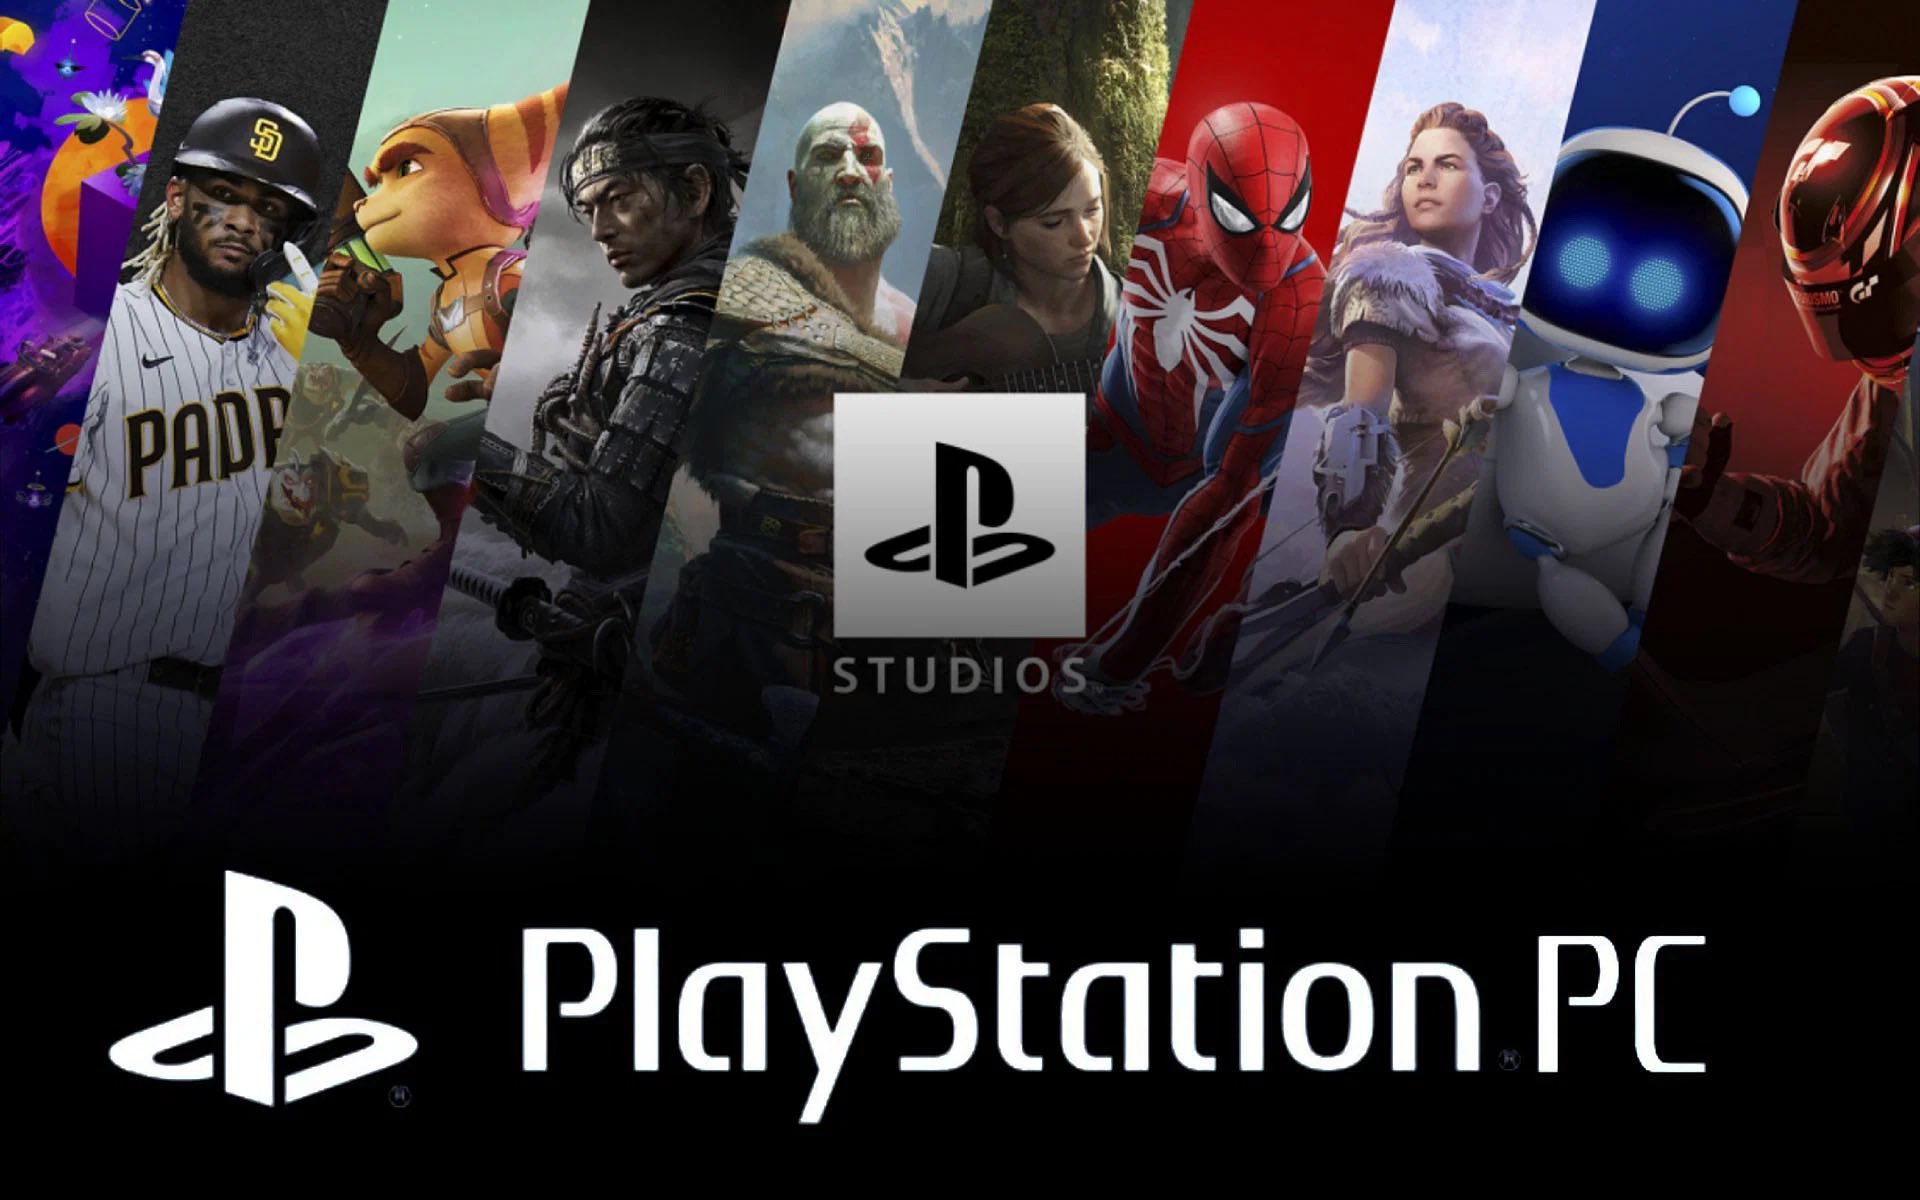 Xbox Game Studios 2020 by Playbox36 on DeviantArt